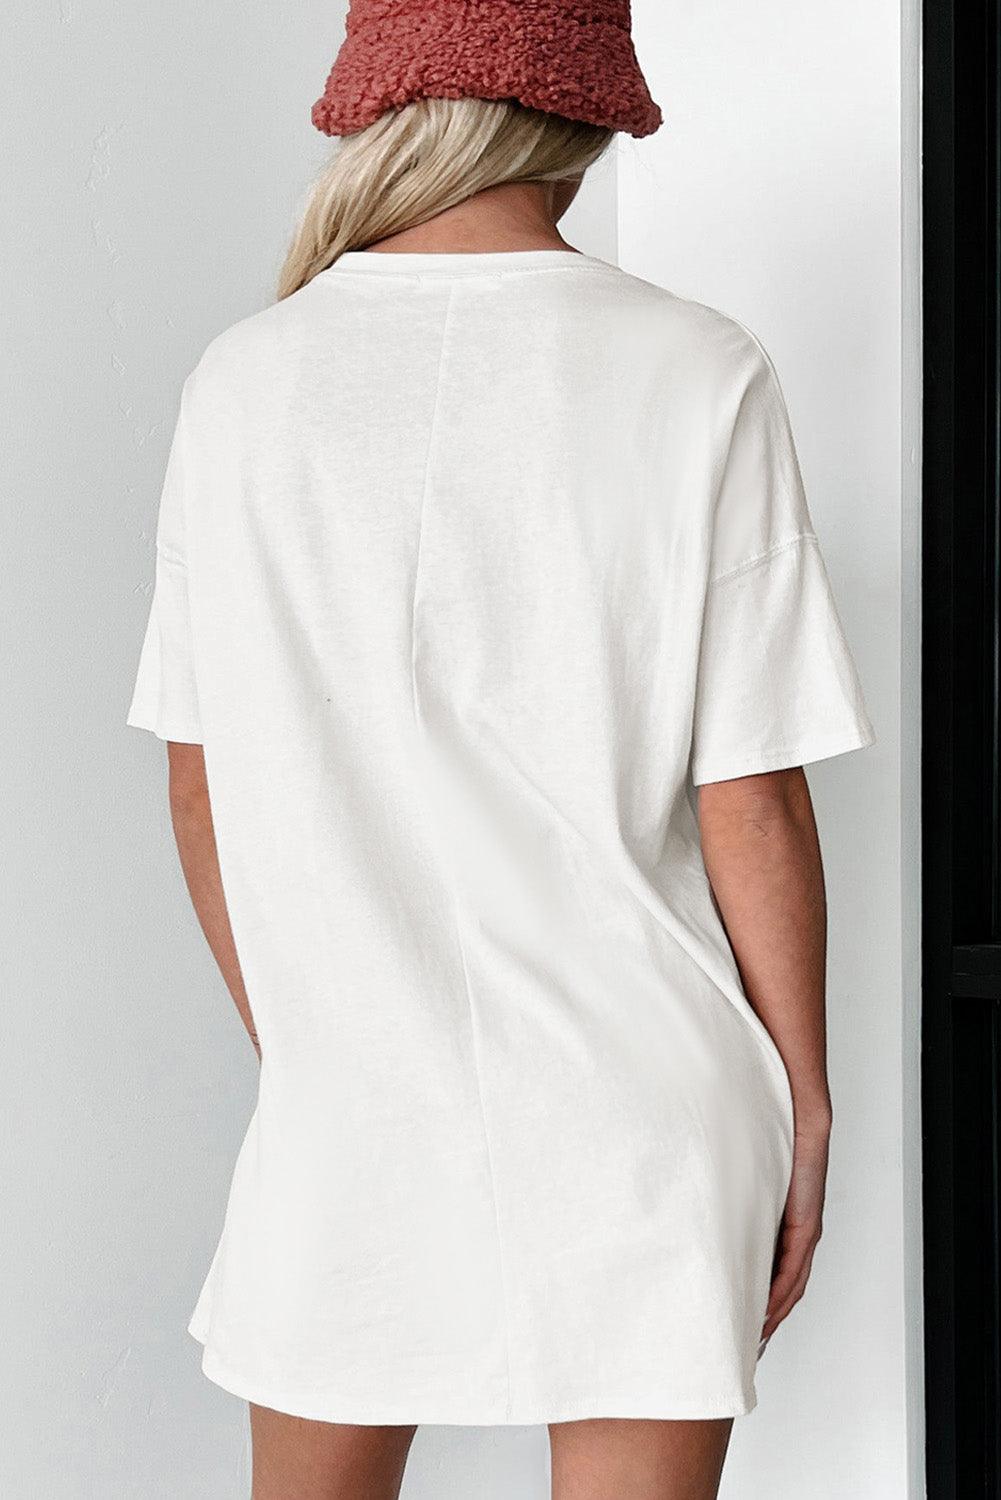 White Sequin Flip Flops Graphic Tunic T Shirt